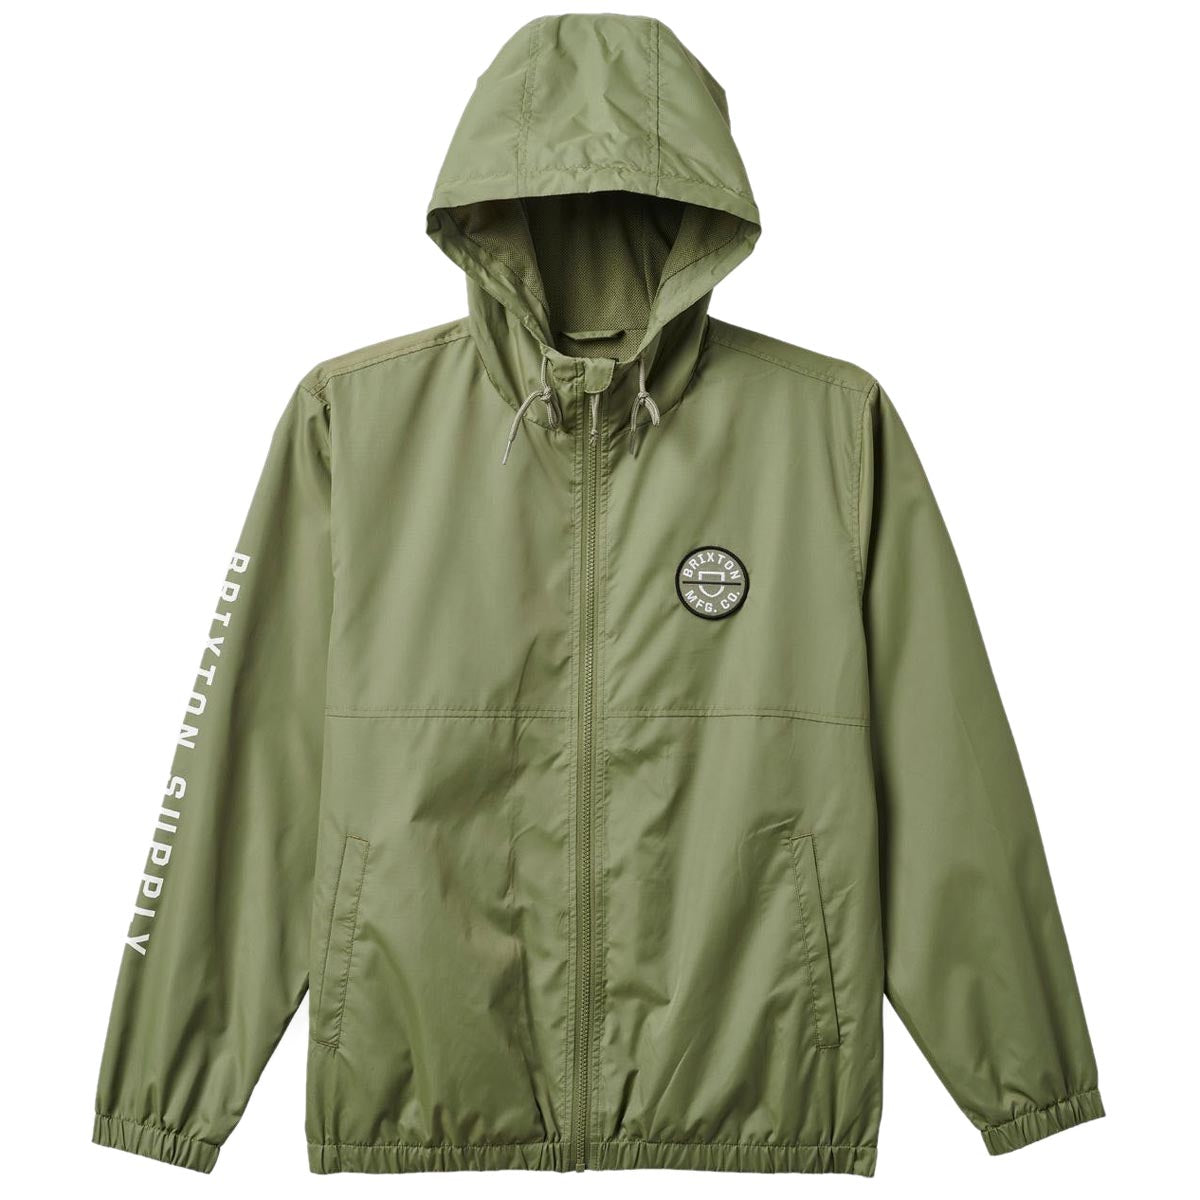 Brixton Claxton Crest Lw Zip Hooded Jacket - Olive Surplus image 3